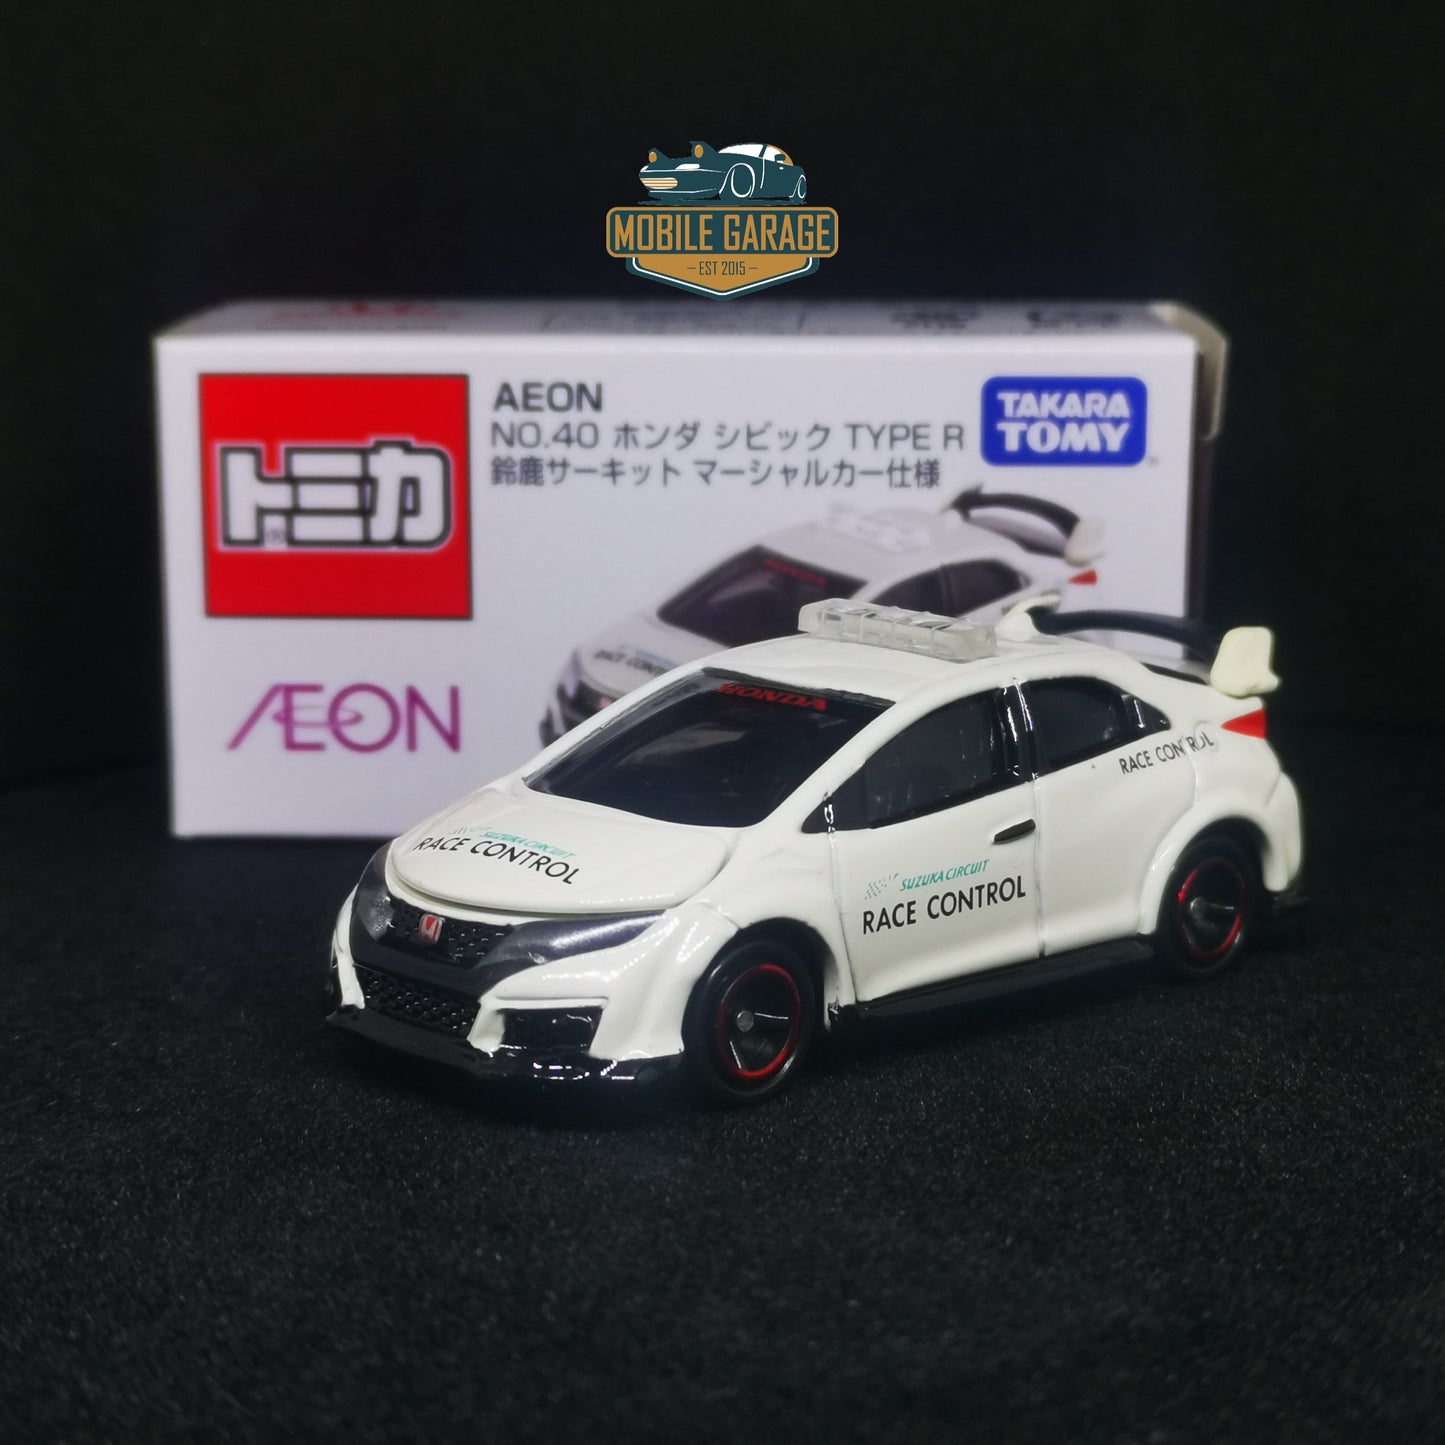 Tomica Aeon Mall Exclusive Honda Civic FK2 TypeR Suzuka Circuit Race Control  Takara Tomy